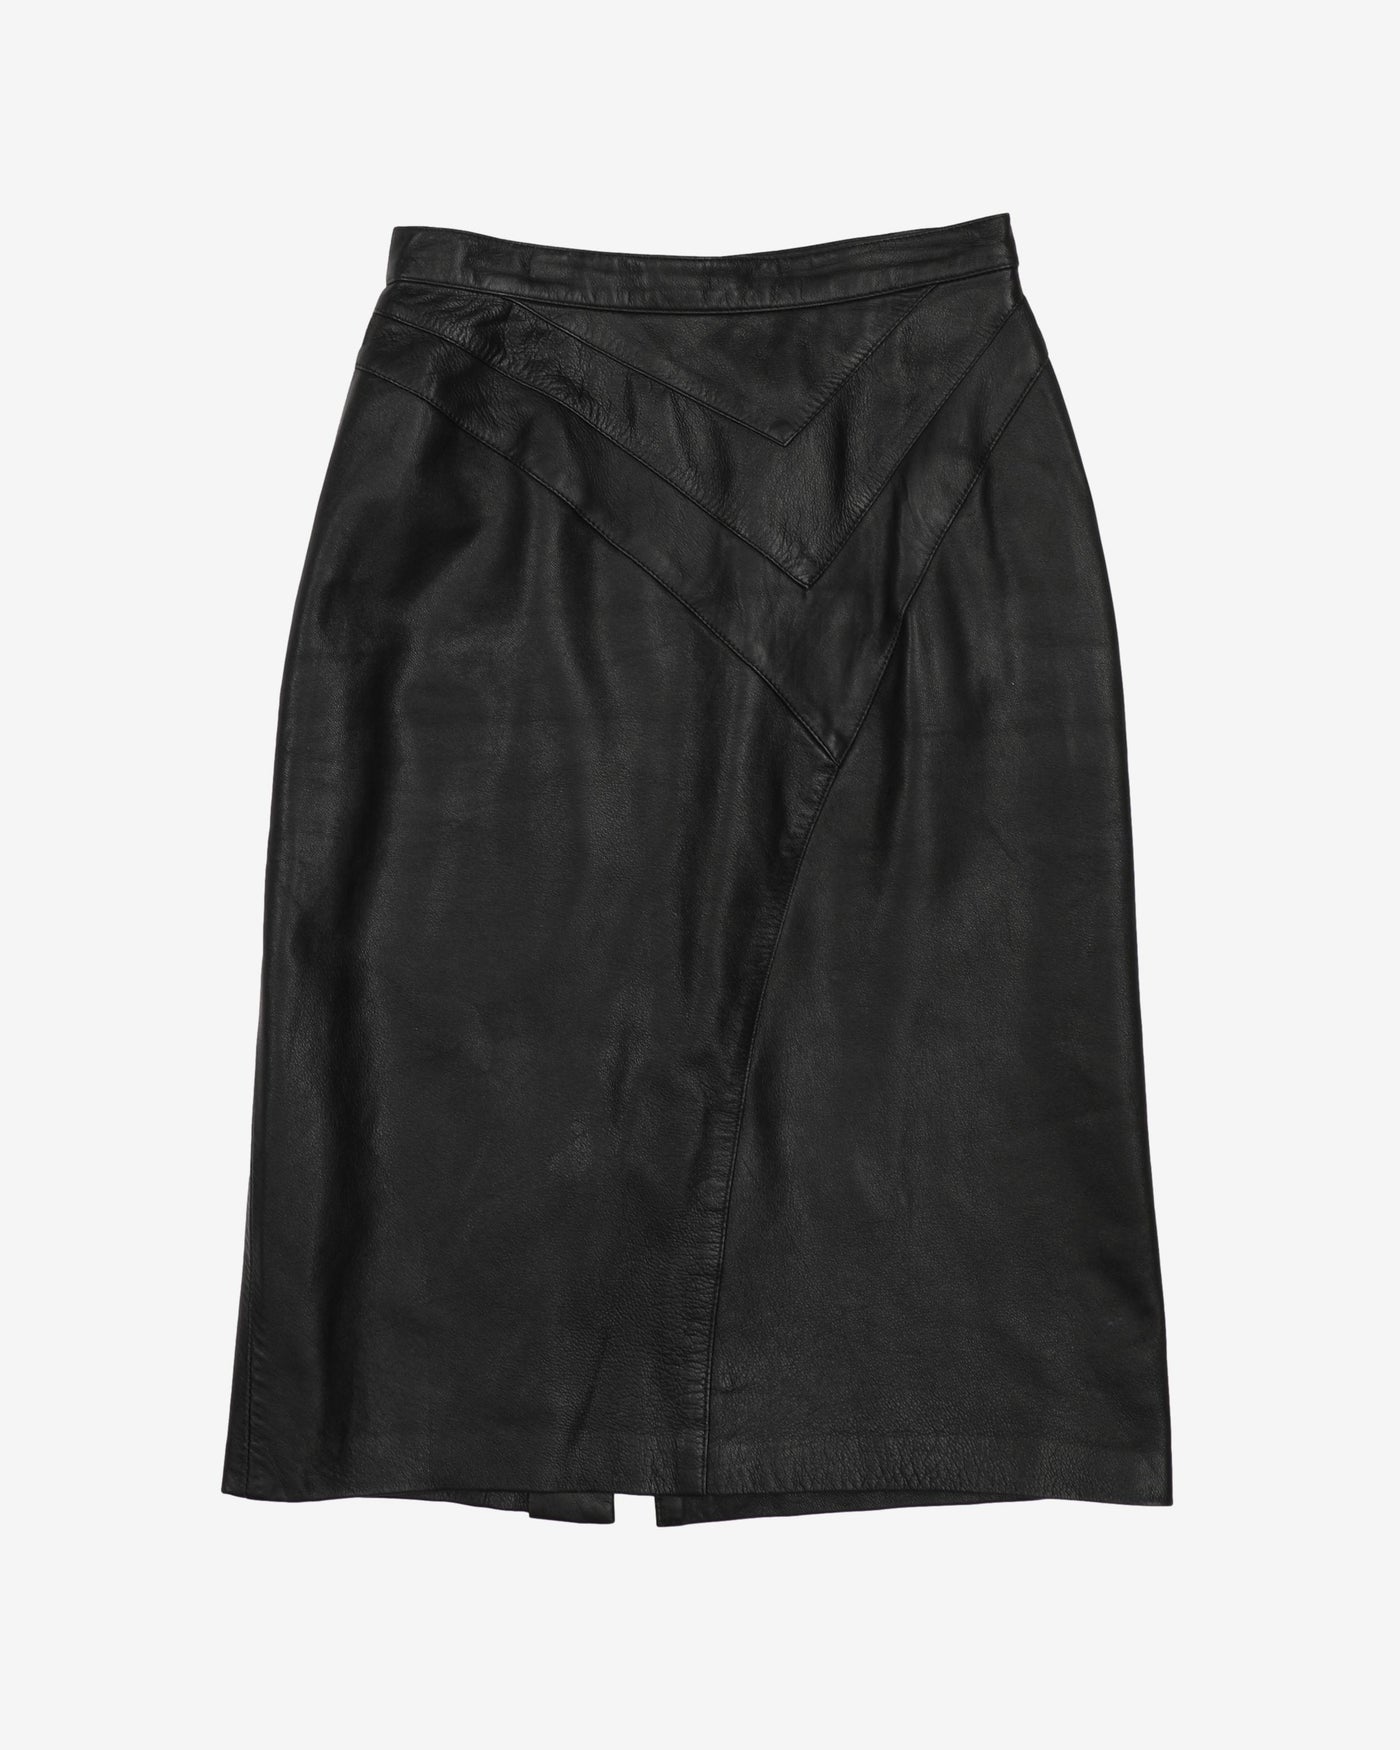 Black Leather Pencil Skirt - XS